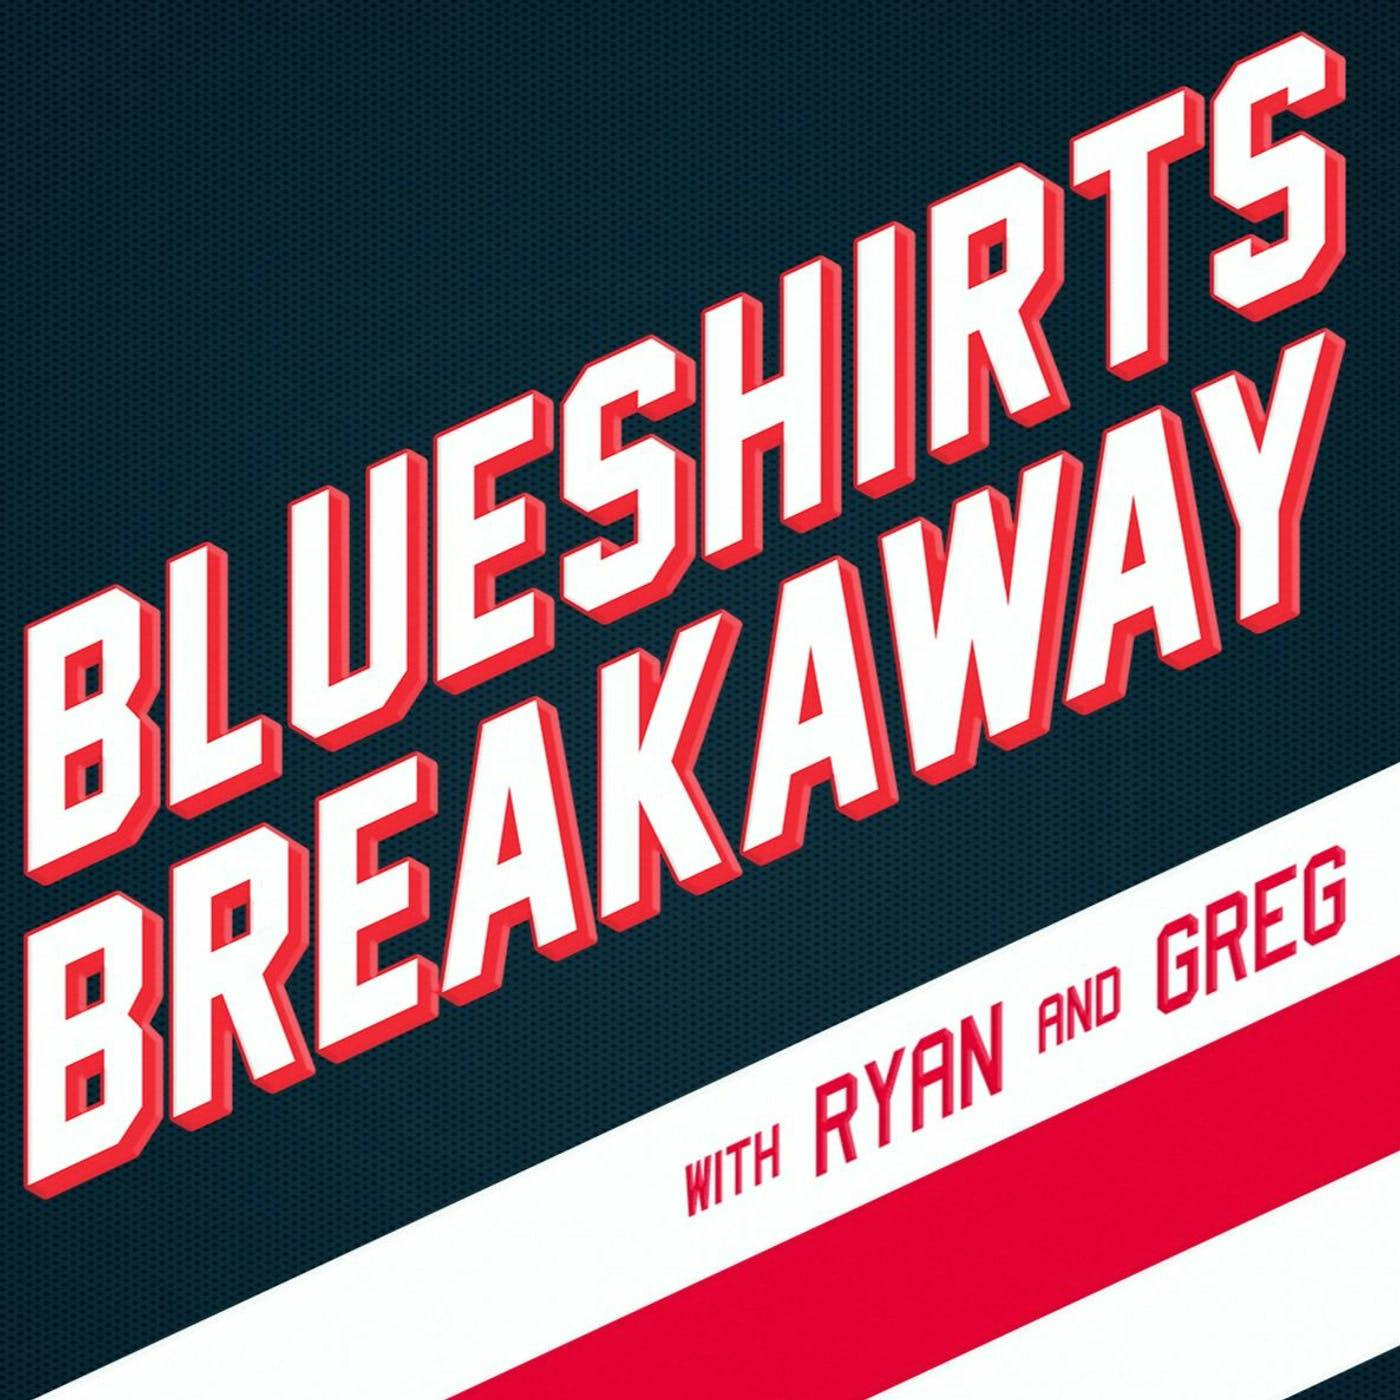 Blueshirts Breakaway - March Madness Bonus Edition